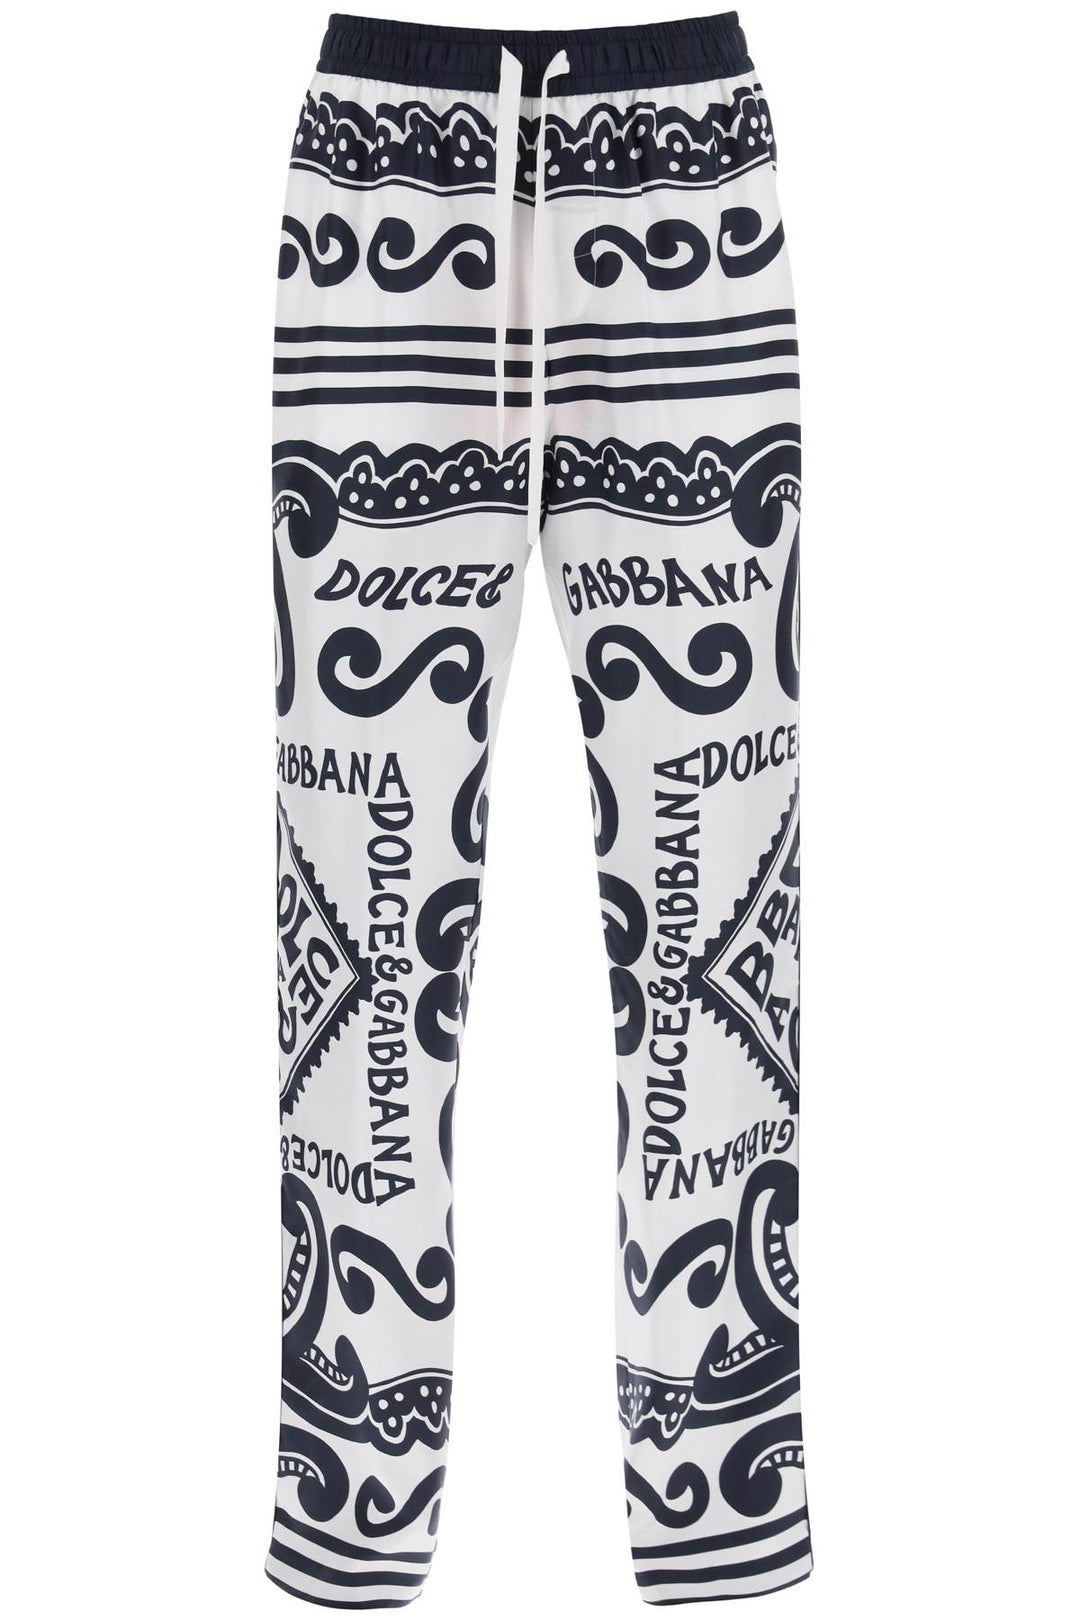 Pantaloni Pigiama Con Stampa Marina - Dolce & Gabbana - Uomo